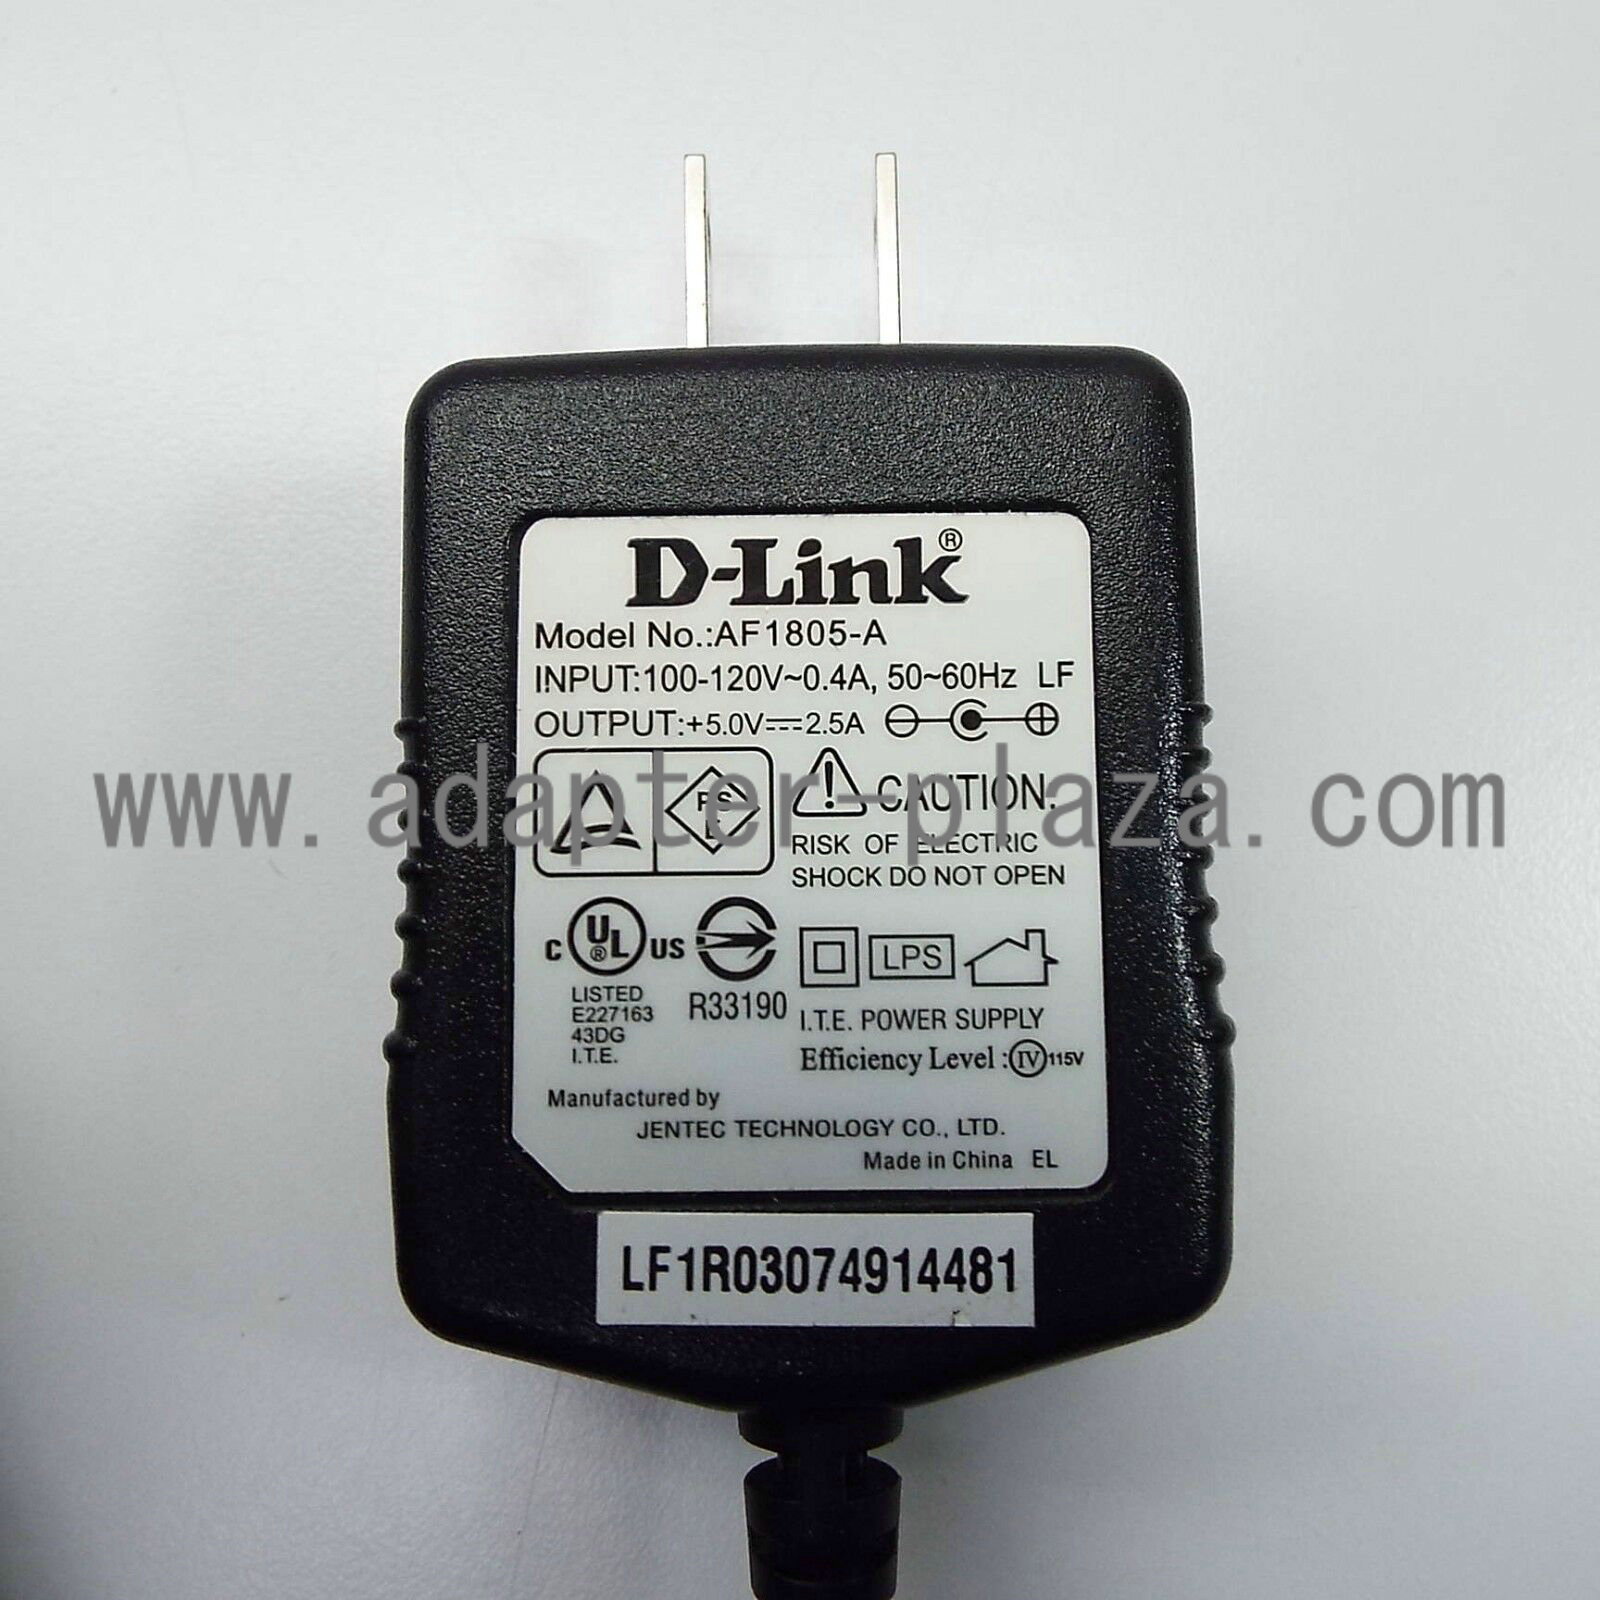 *Brand NEW*D-Link AF1805-A D-Link DIR-601 (T109) 5.0V 2.5A AC DC Adapter POWER SUPPLY